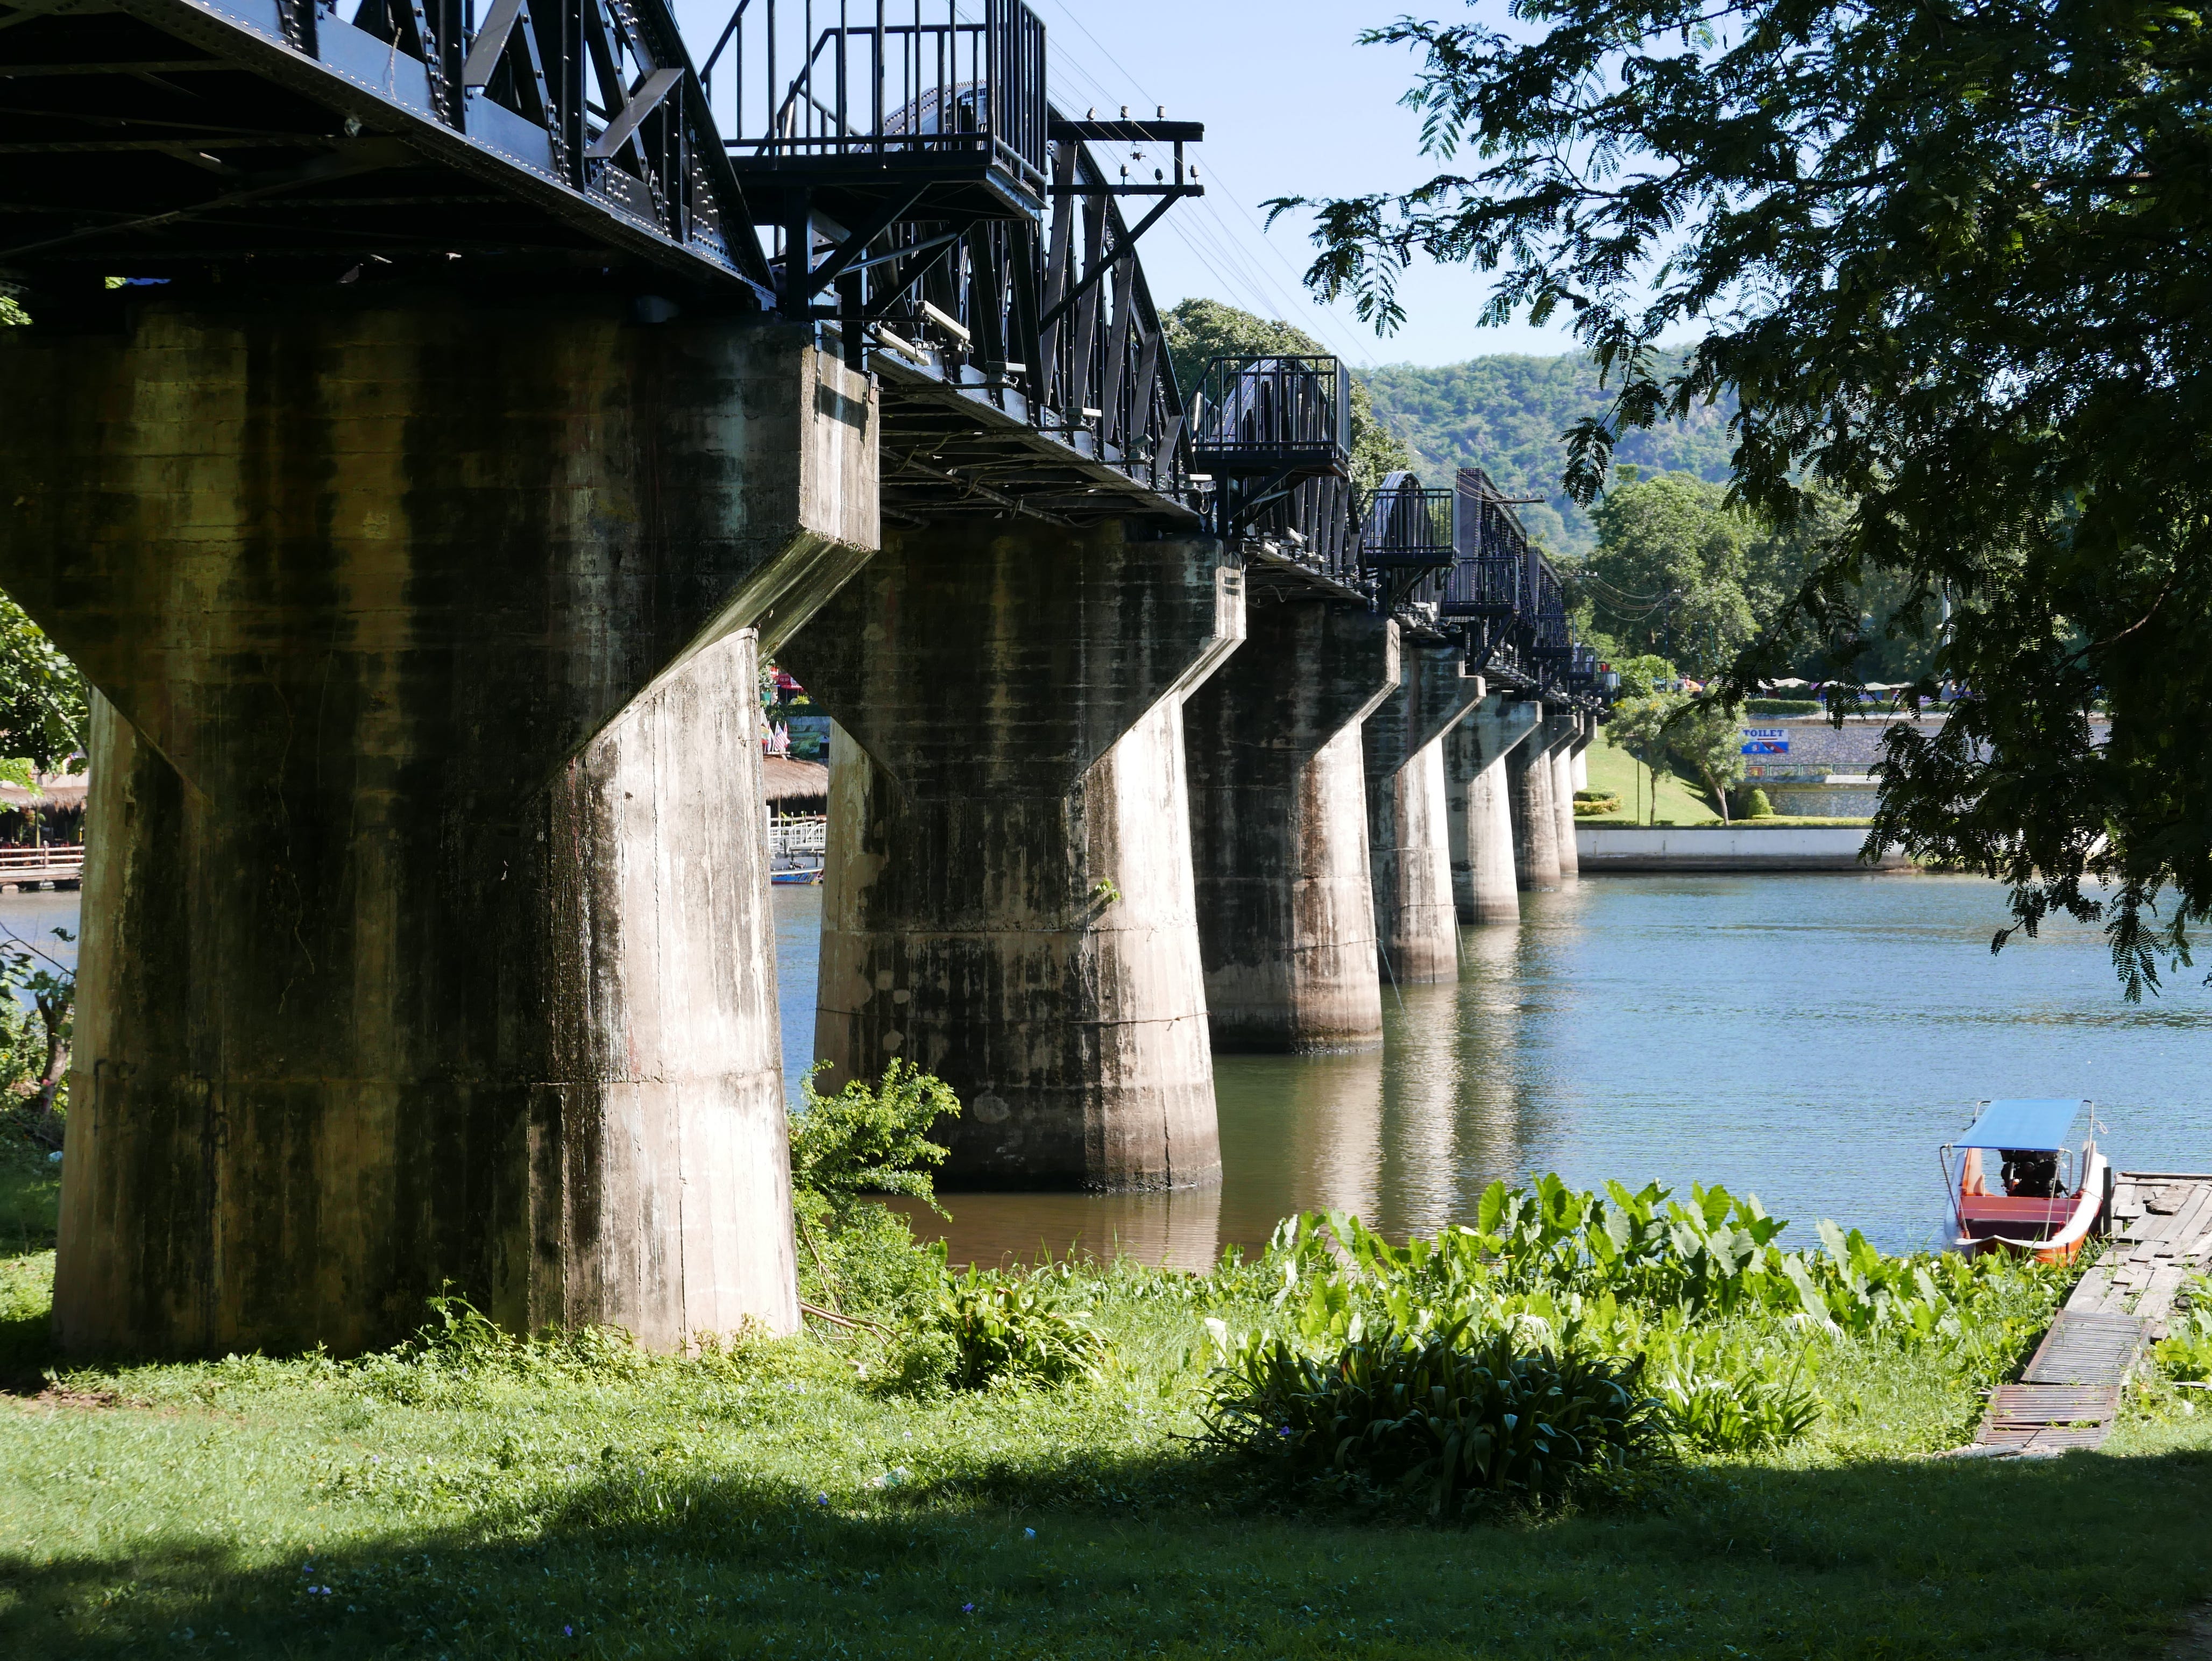 The Bridge on the River Kwai - Wikipedia